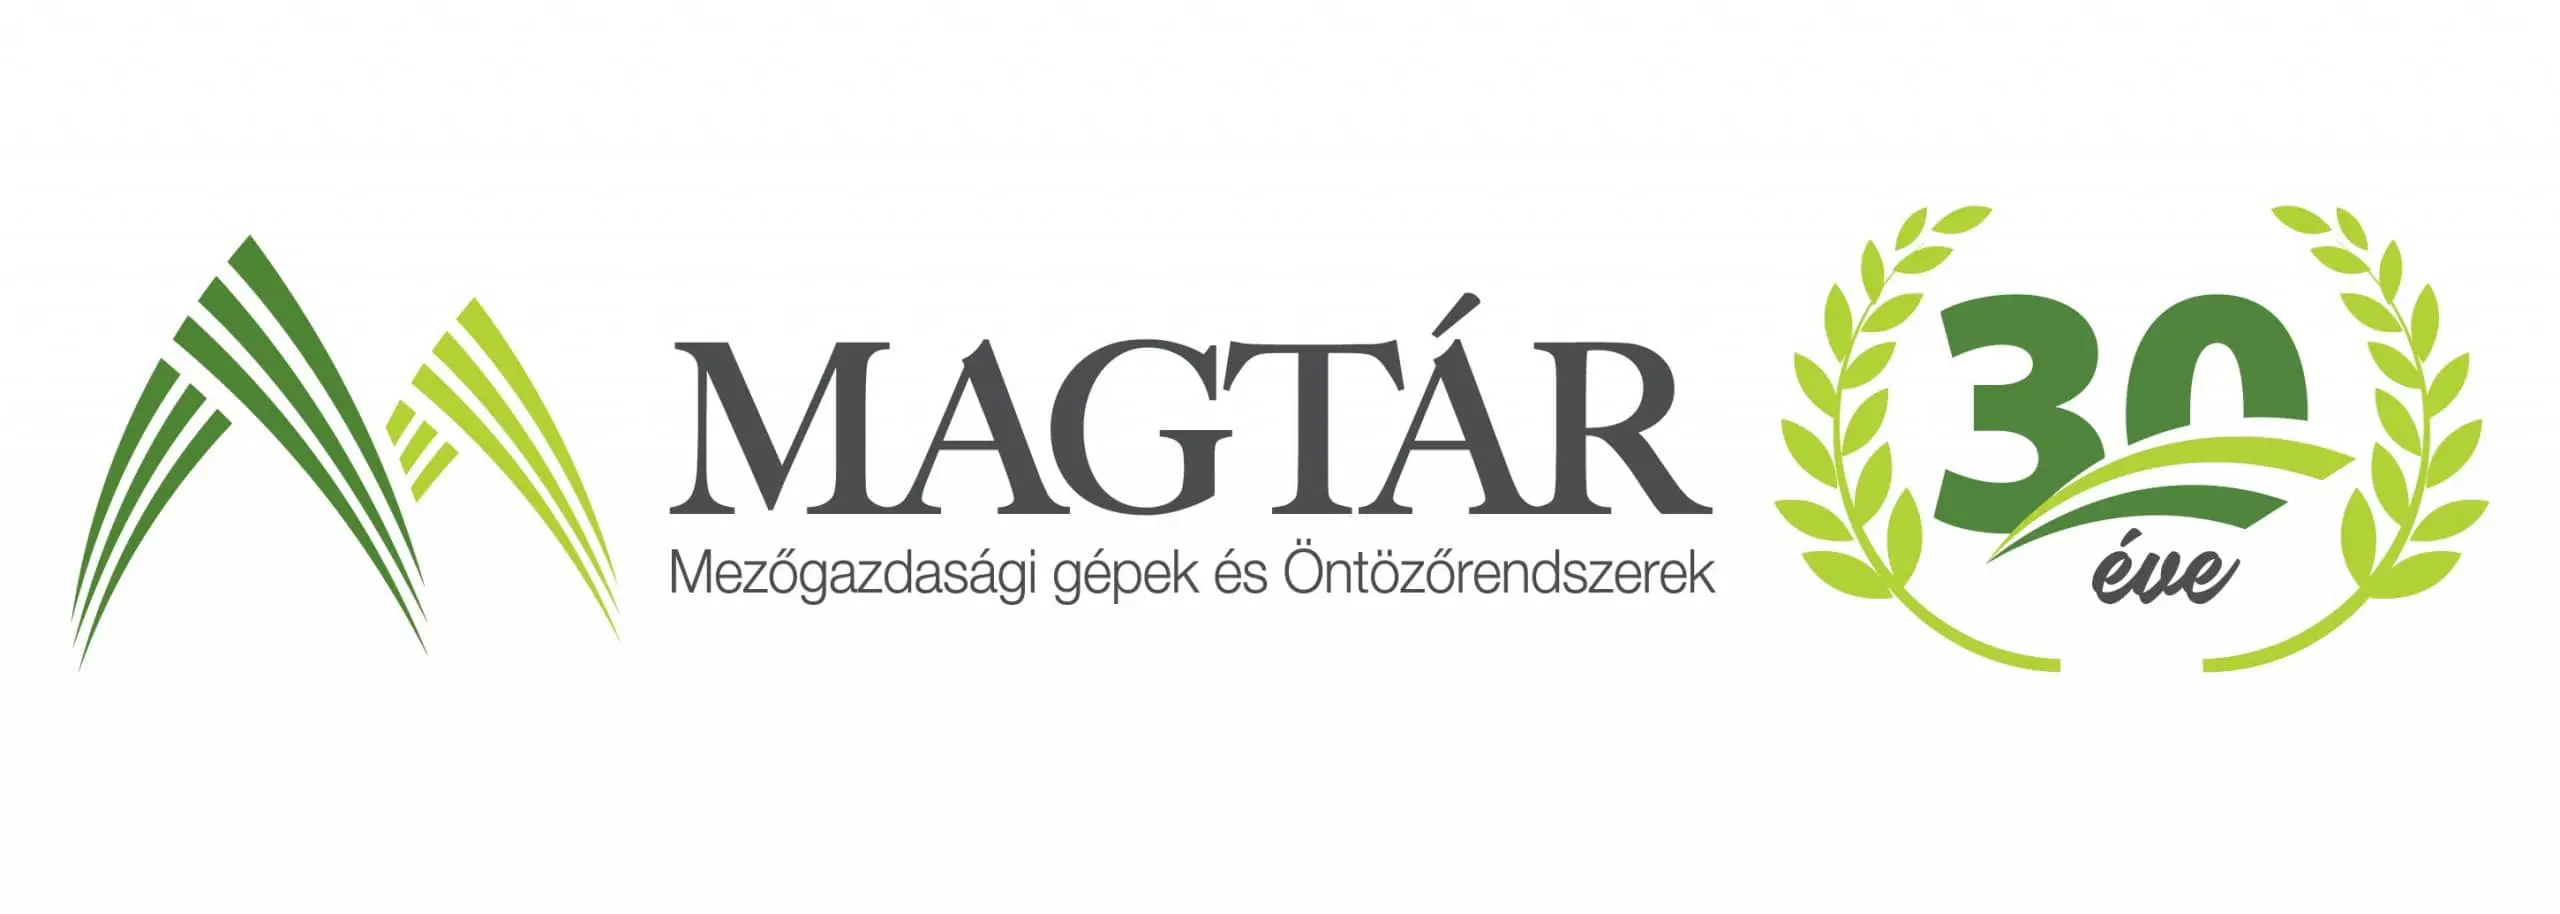 Magtár project